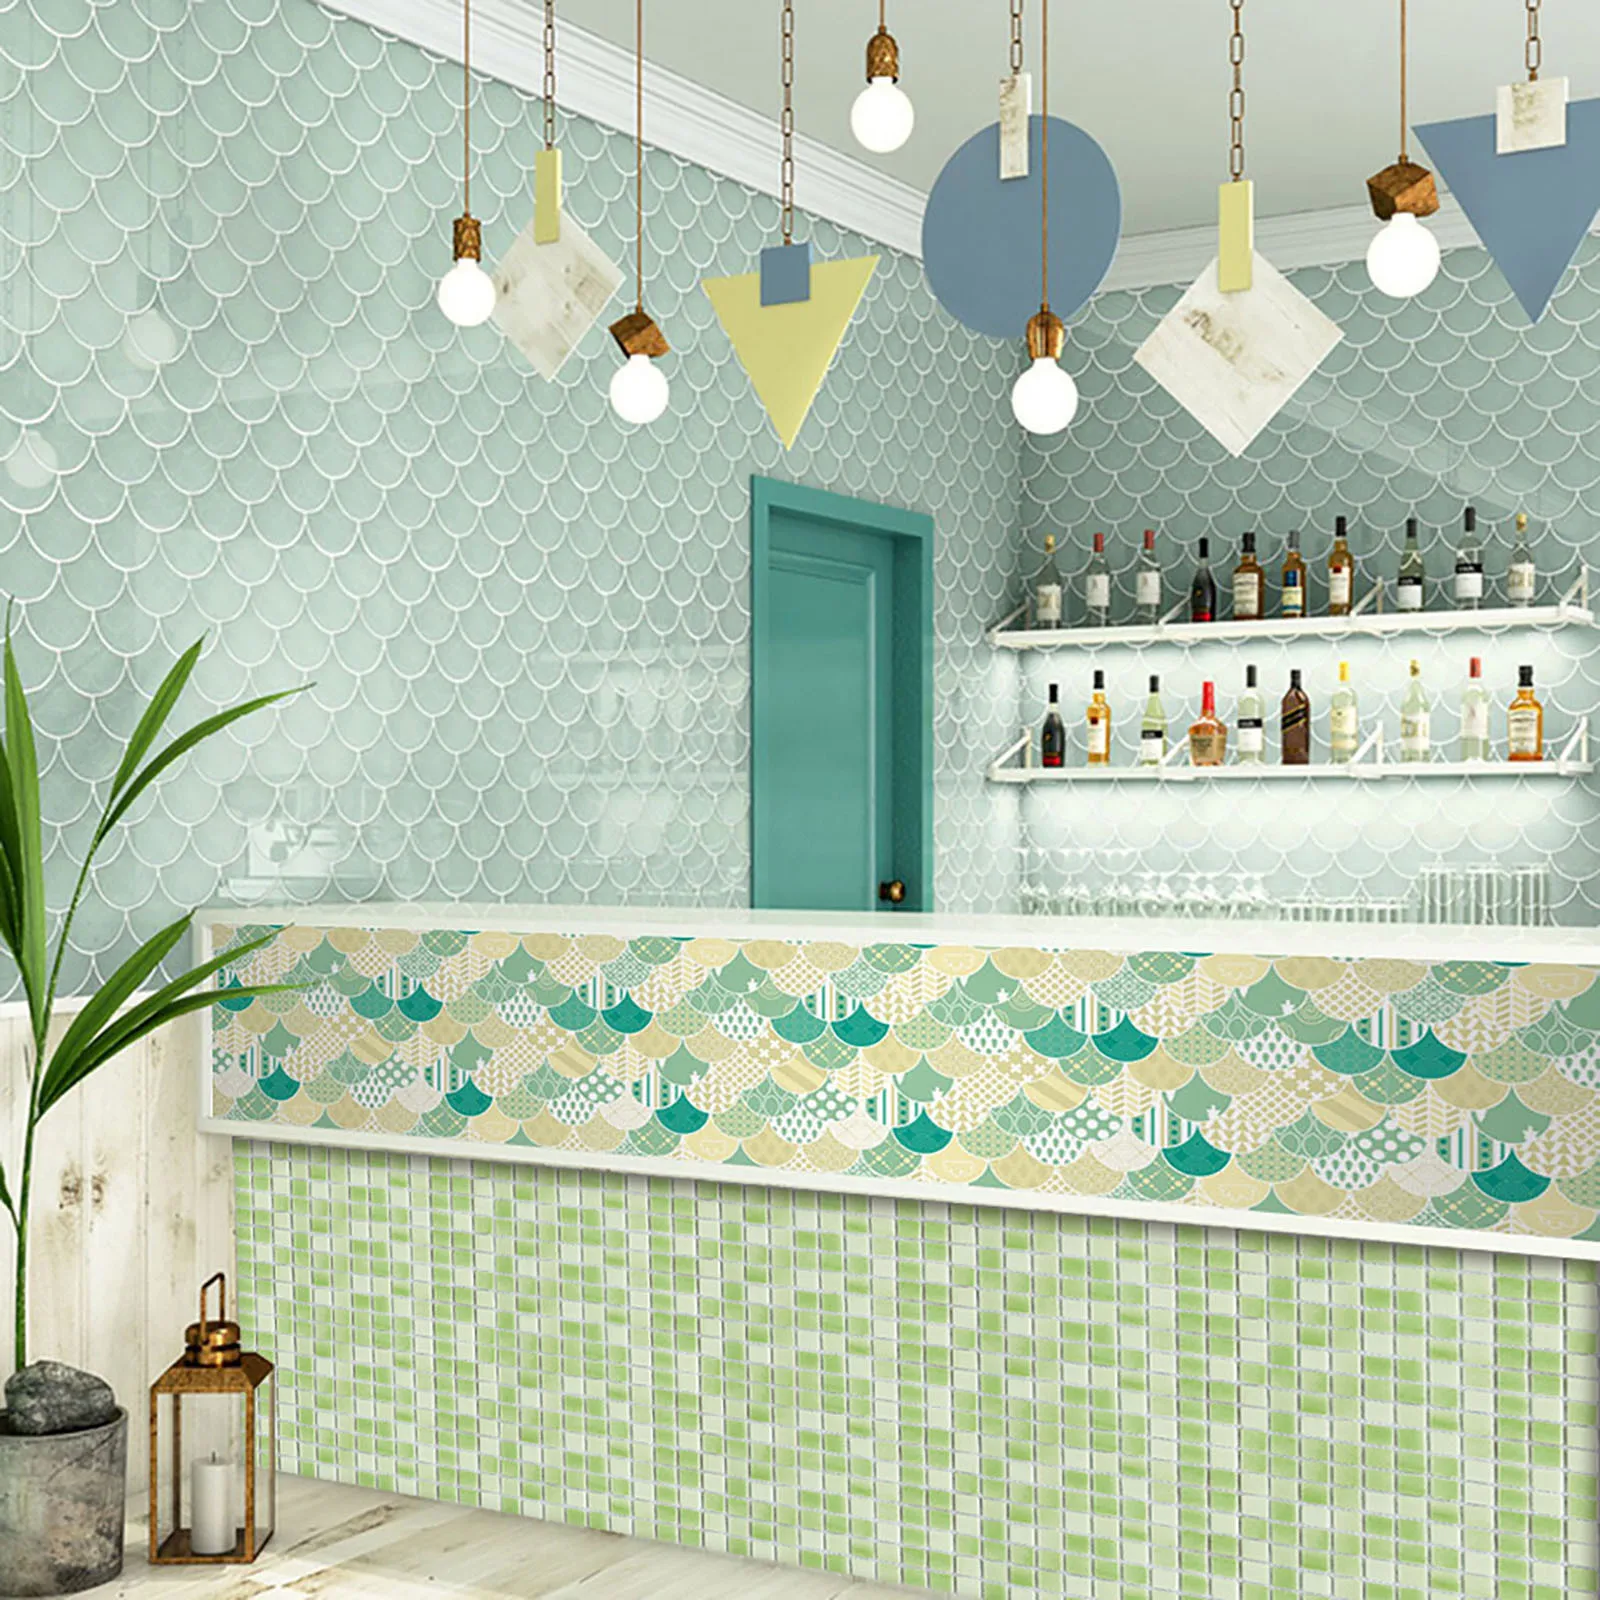 

10pcs Marble Mosaic Tiles Wall Sticker Mirror Transfers Flat 3D Covers For Kitchen Bathroom Peel & Stick Waterproof Art Mural